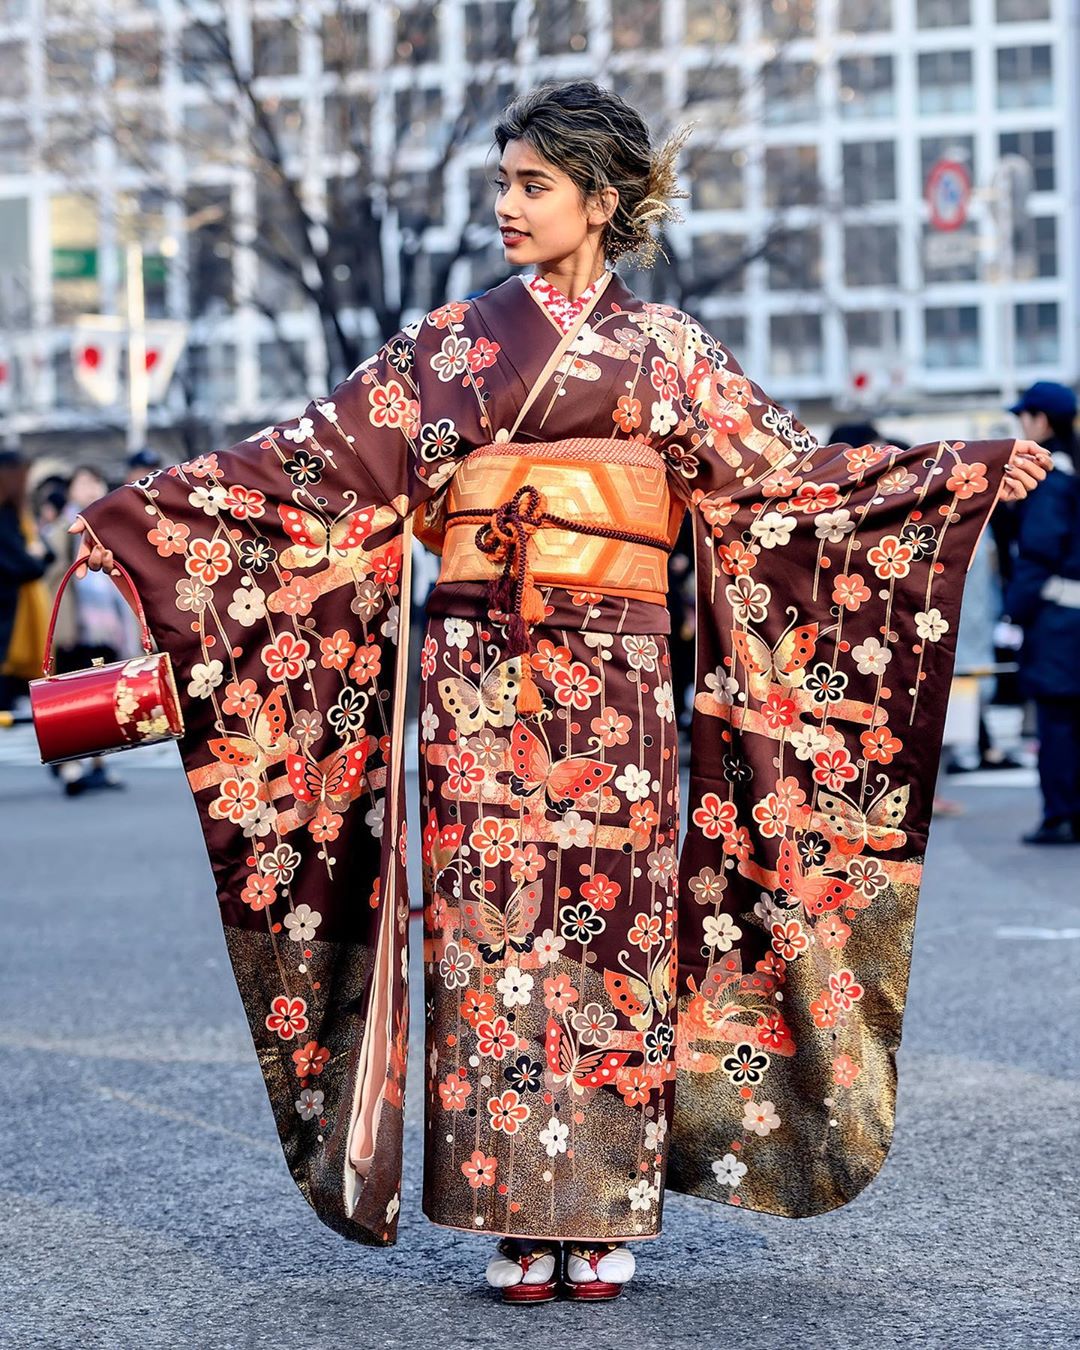 Tokyo Fashion: Traditional Japanese furisode kimono on the streets of